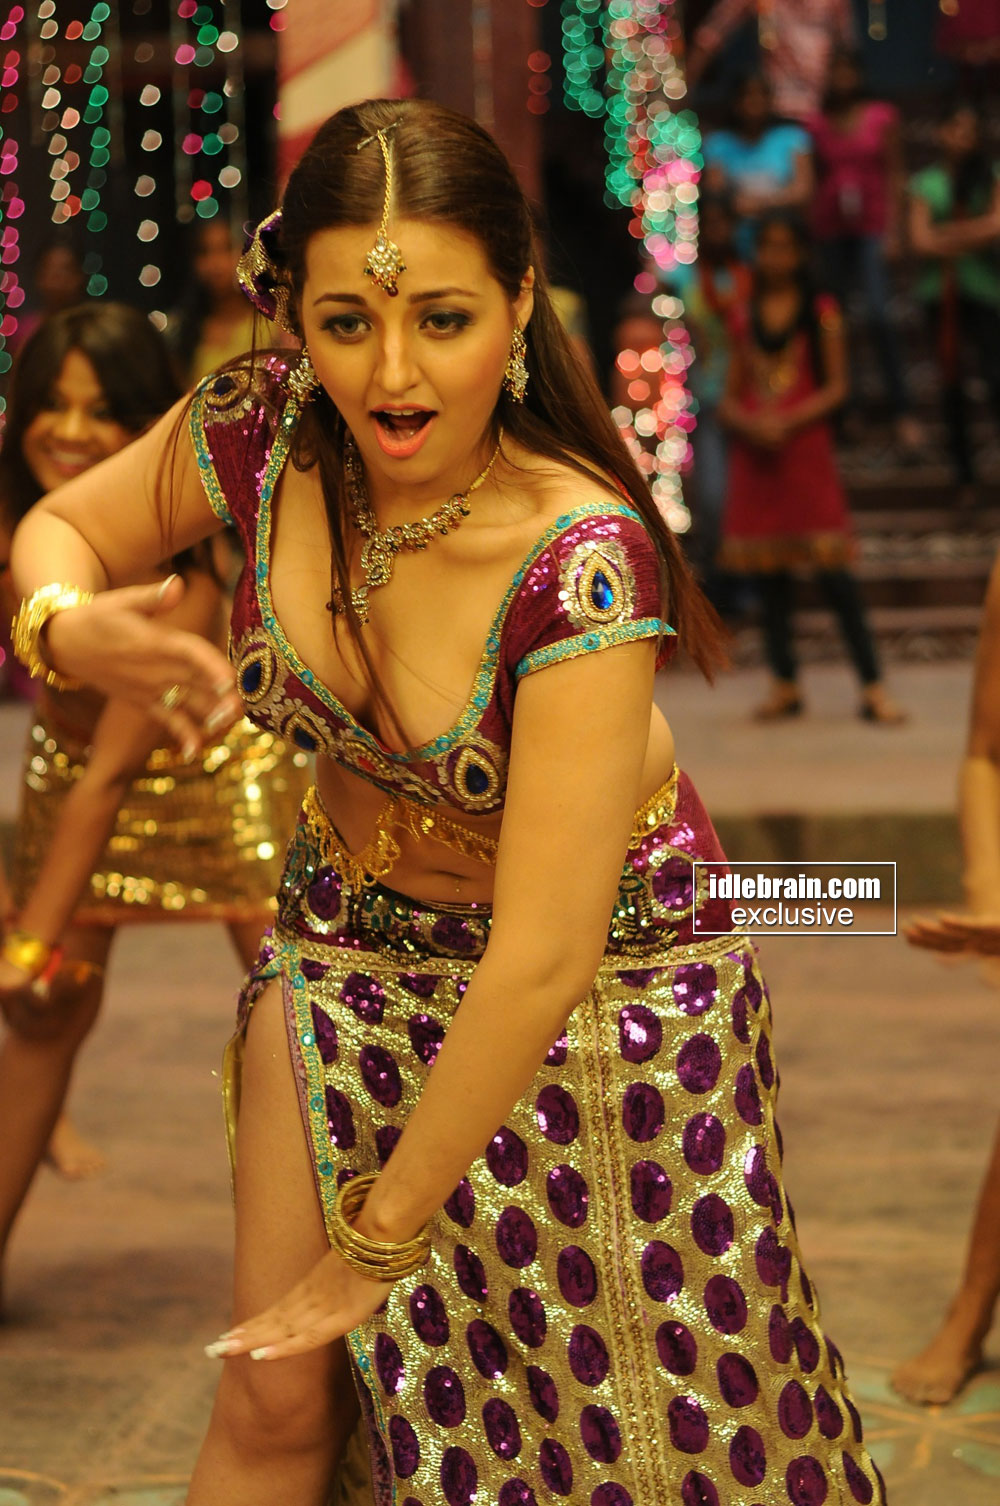 Devadas style marchadu photo gallery - Telugu cinema - Tanish, Sana, Chandi...